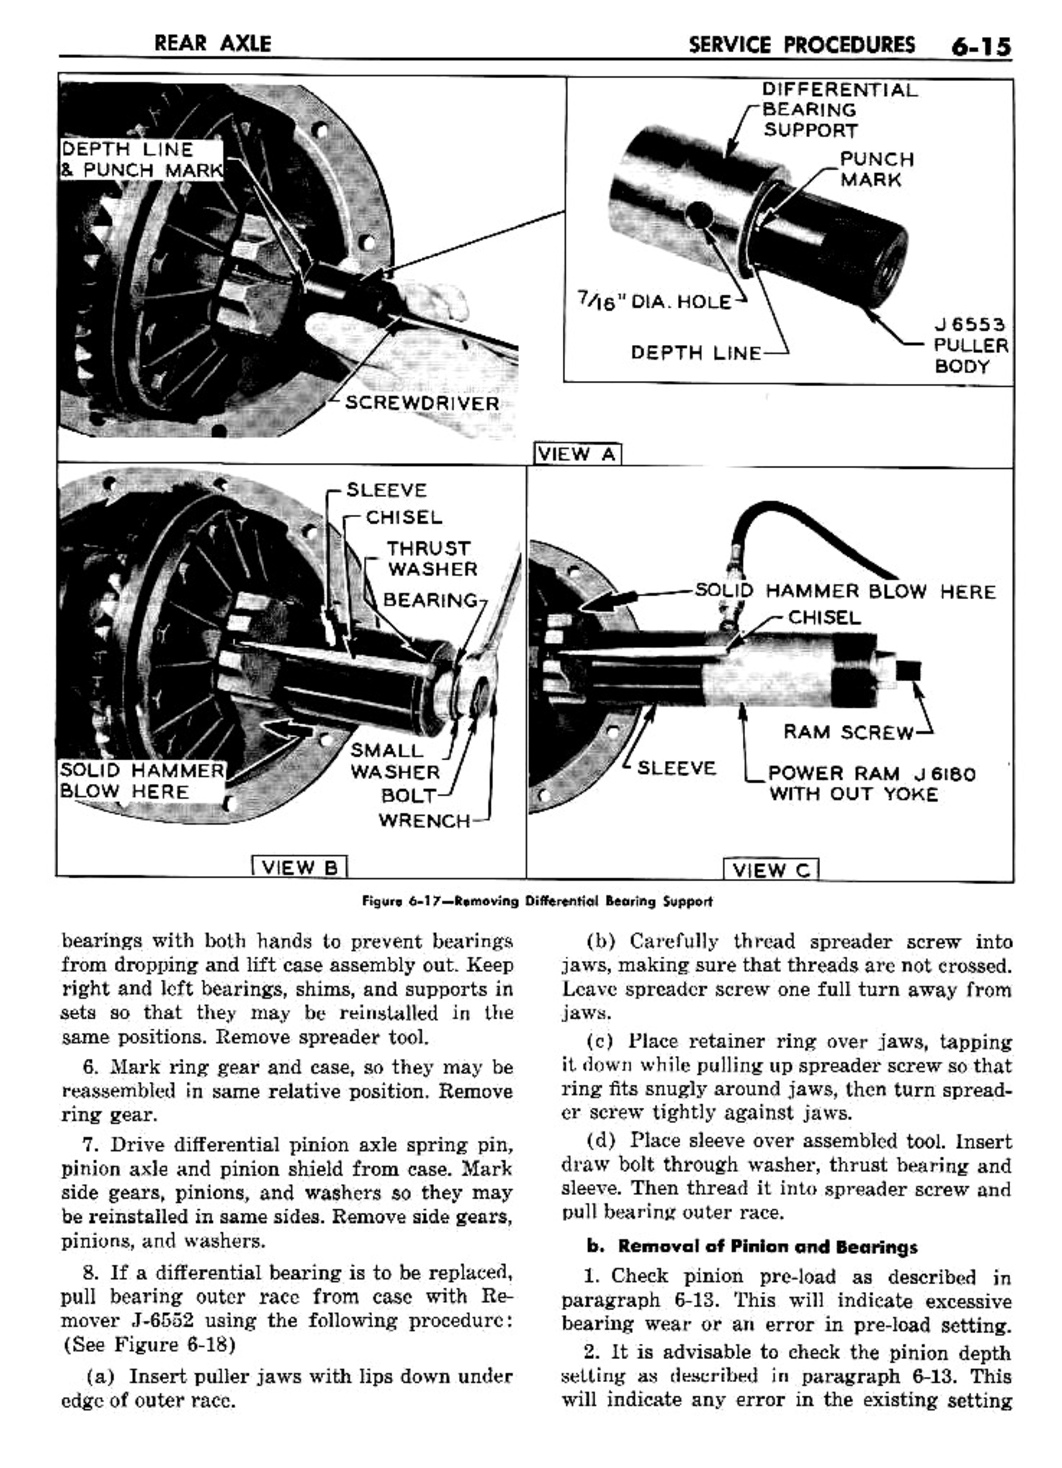 n_07 1957 Buick Shop Manual - Rear Axle-015-015.jpg